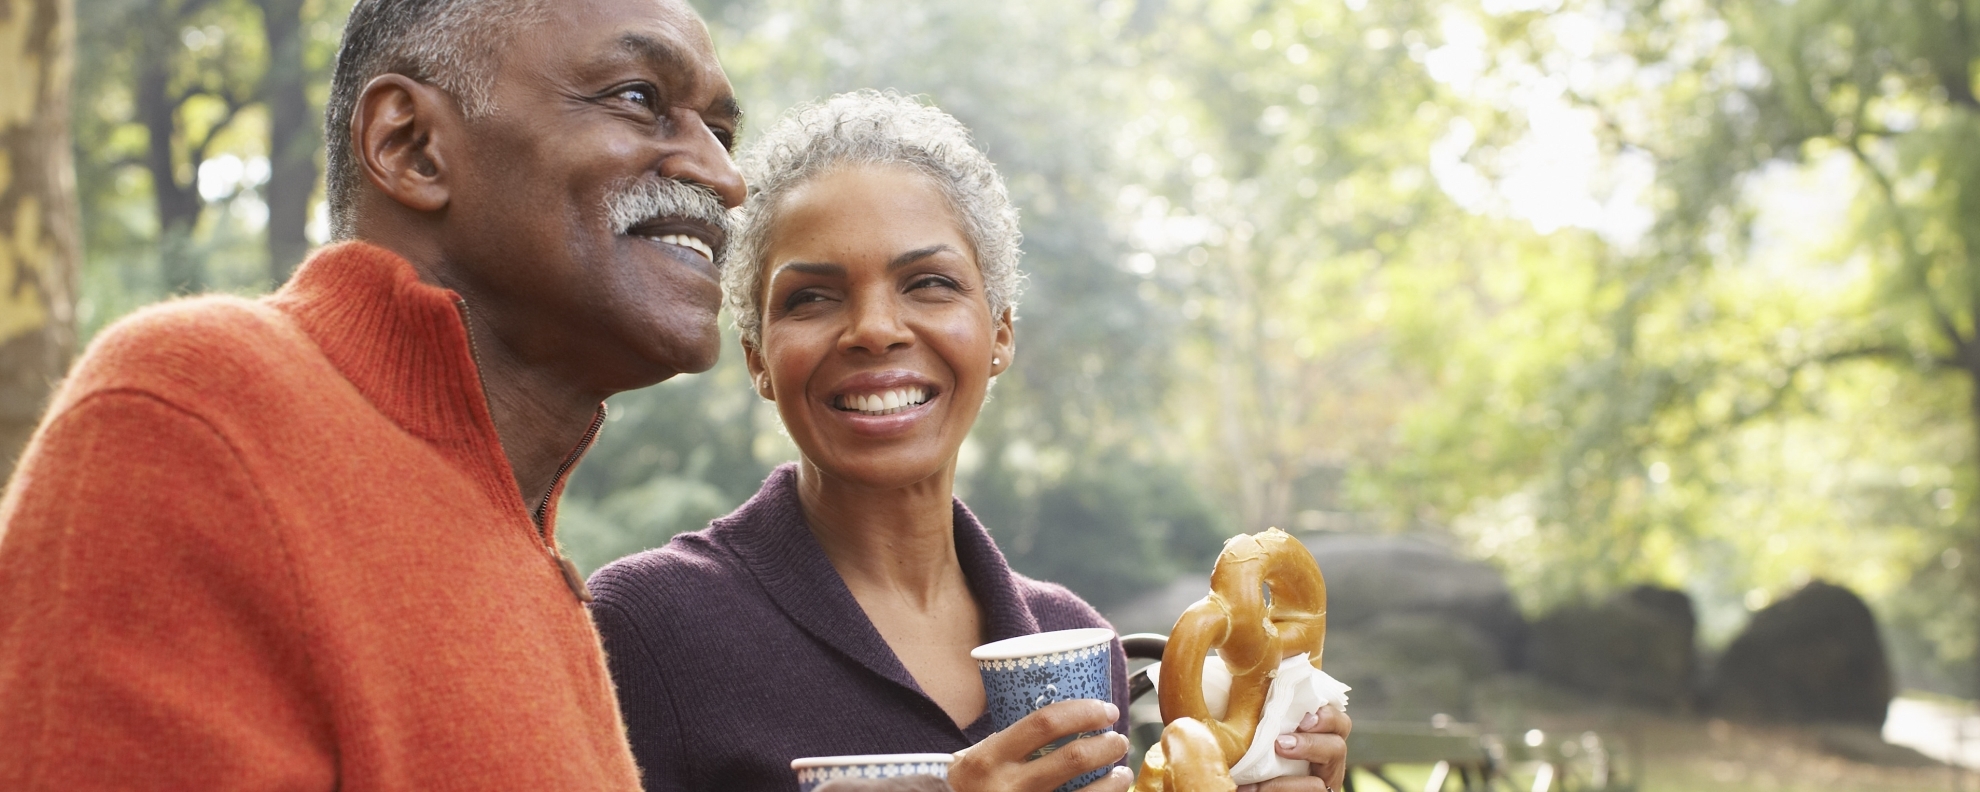 Senior couple eating pretzels on park bench